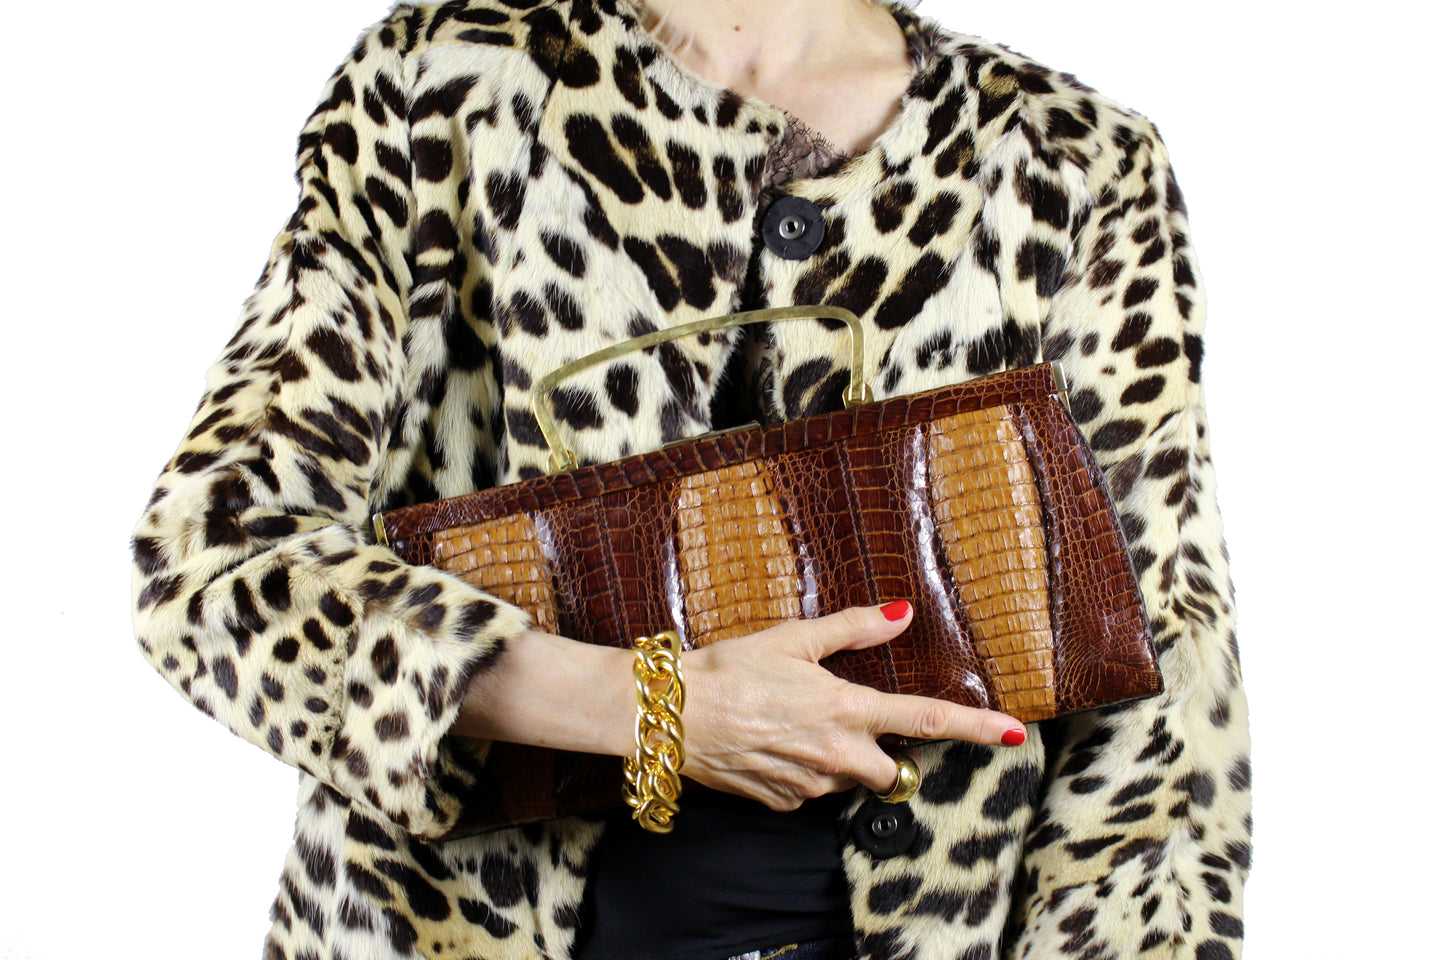 ESTEVE cognac color triple hornback baby crocodile skin handbag